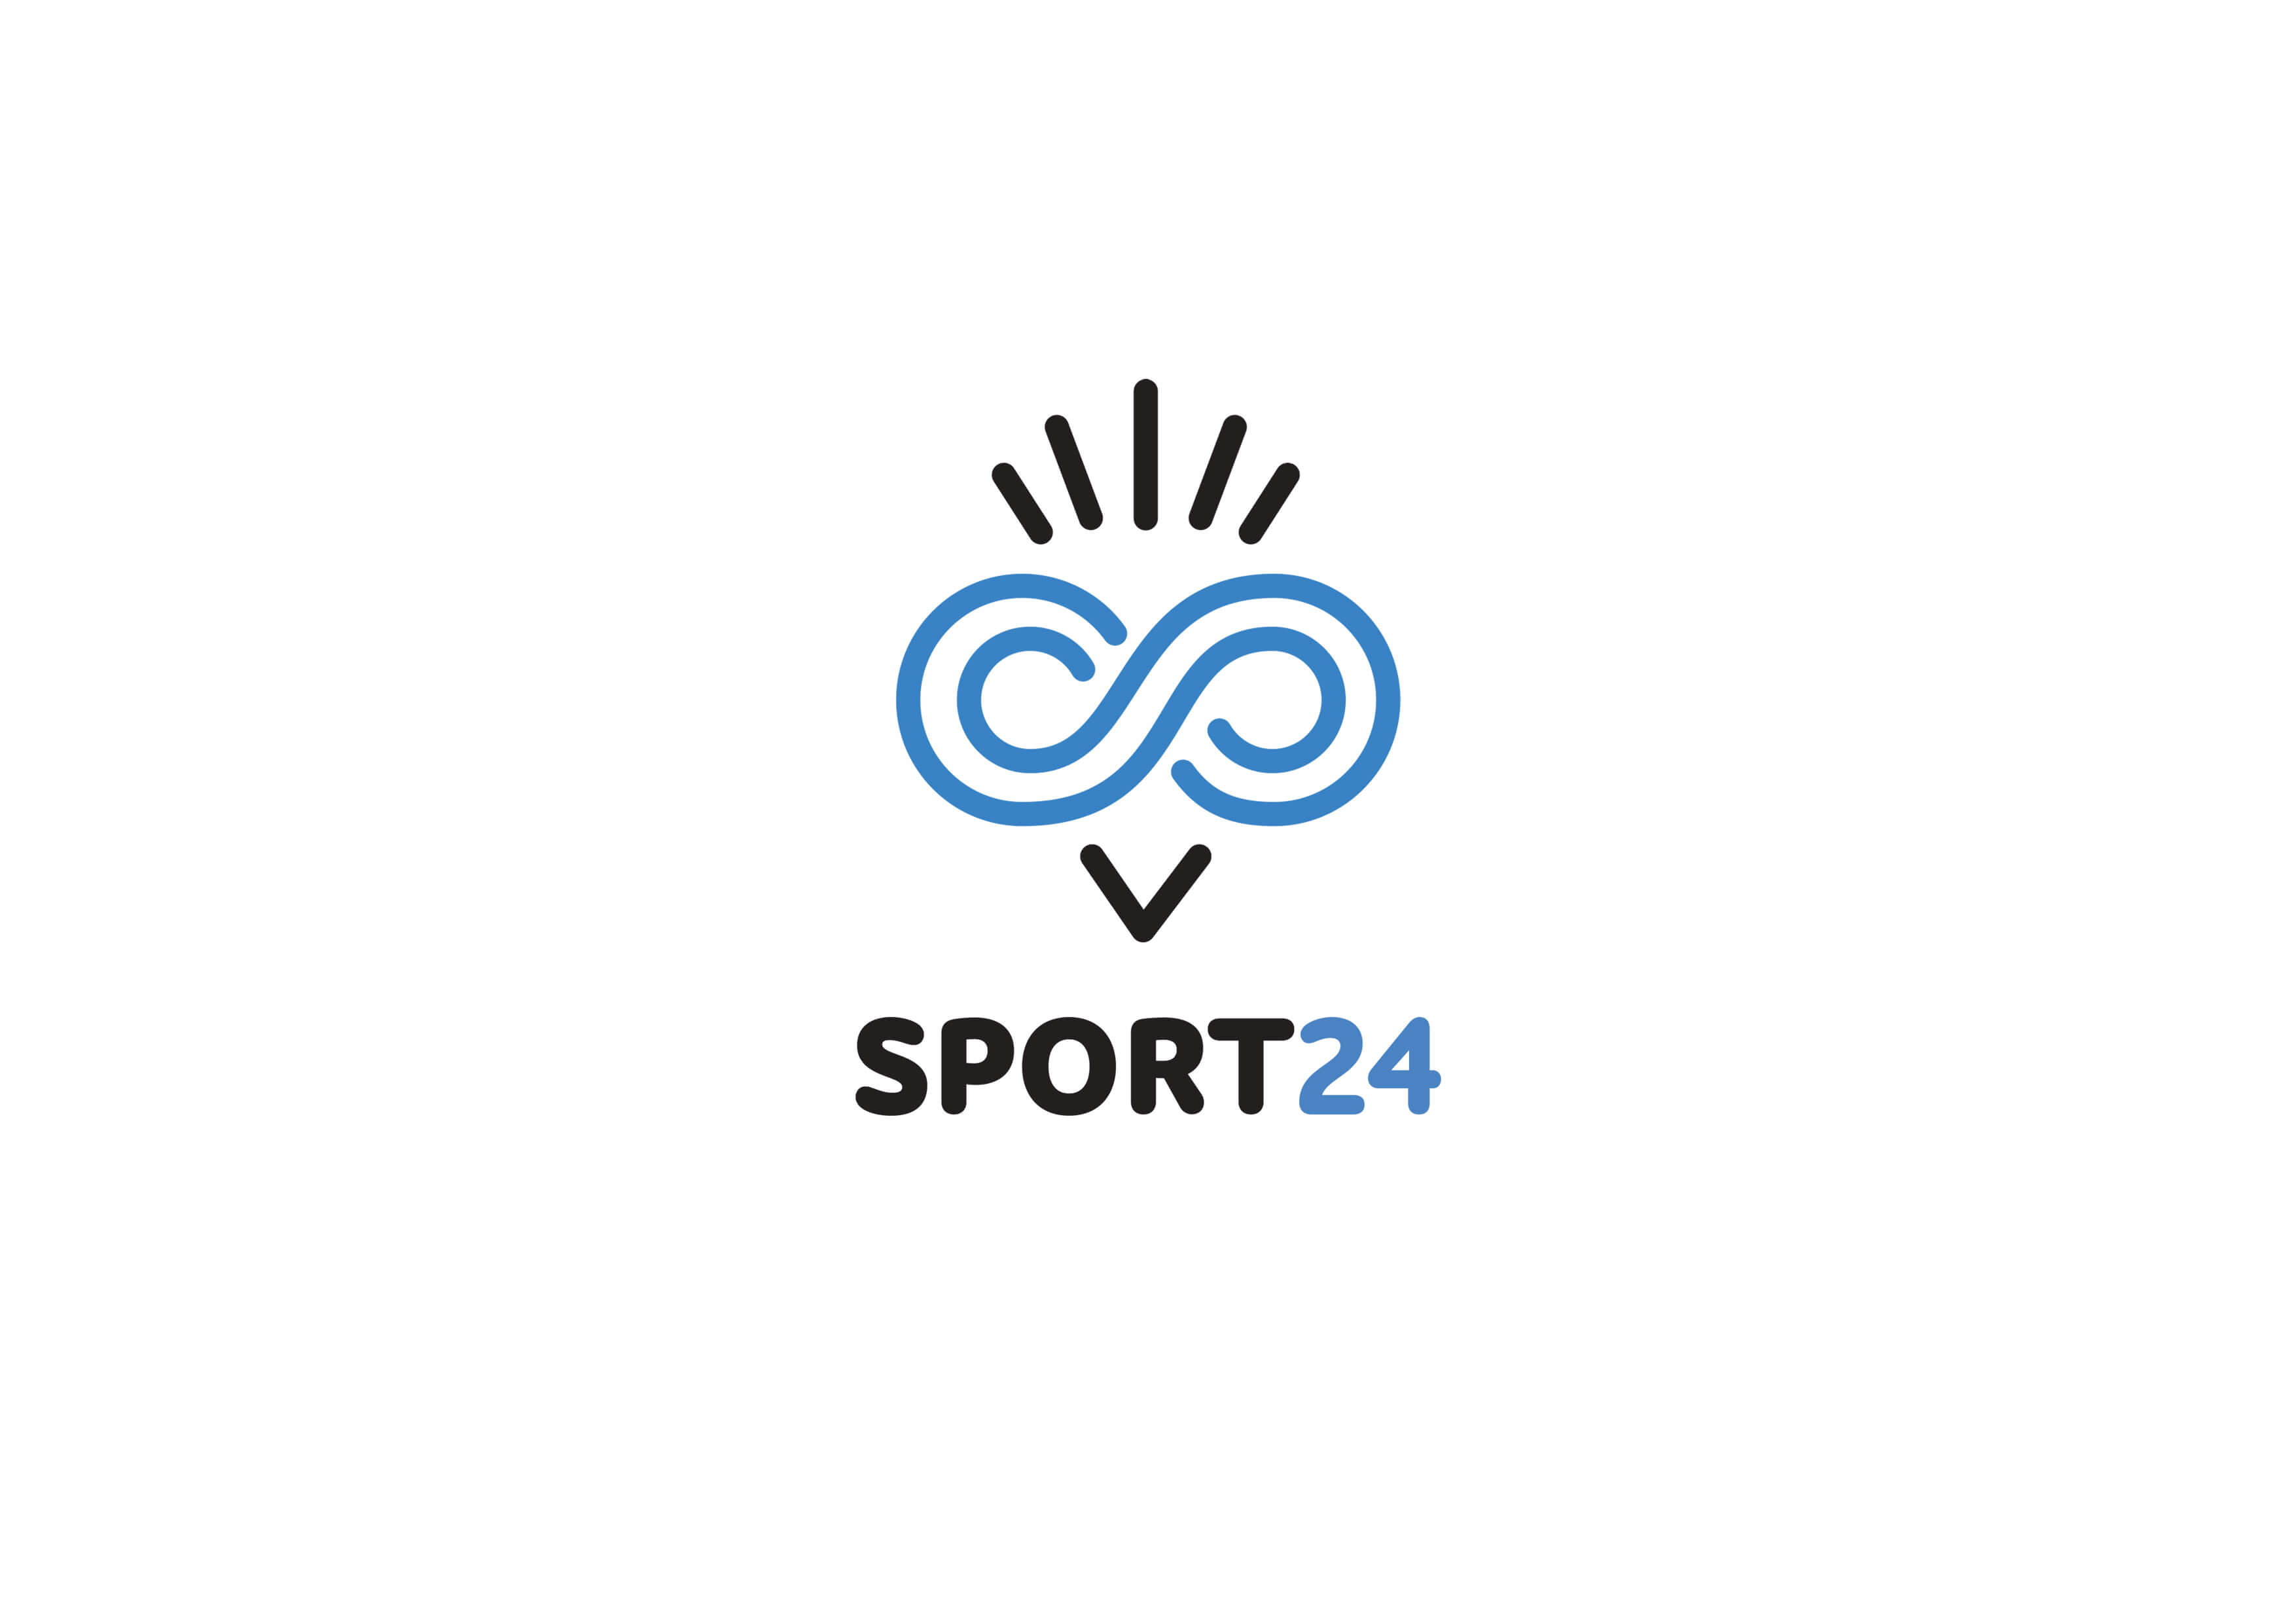 sport24 identity process 18